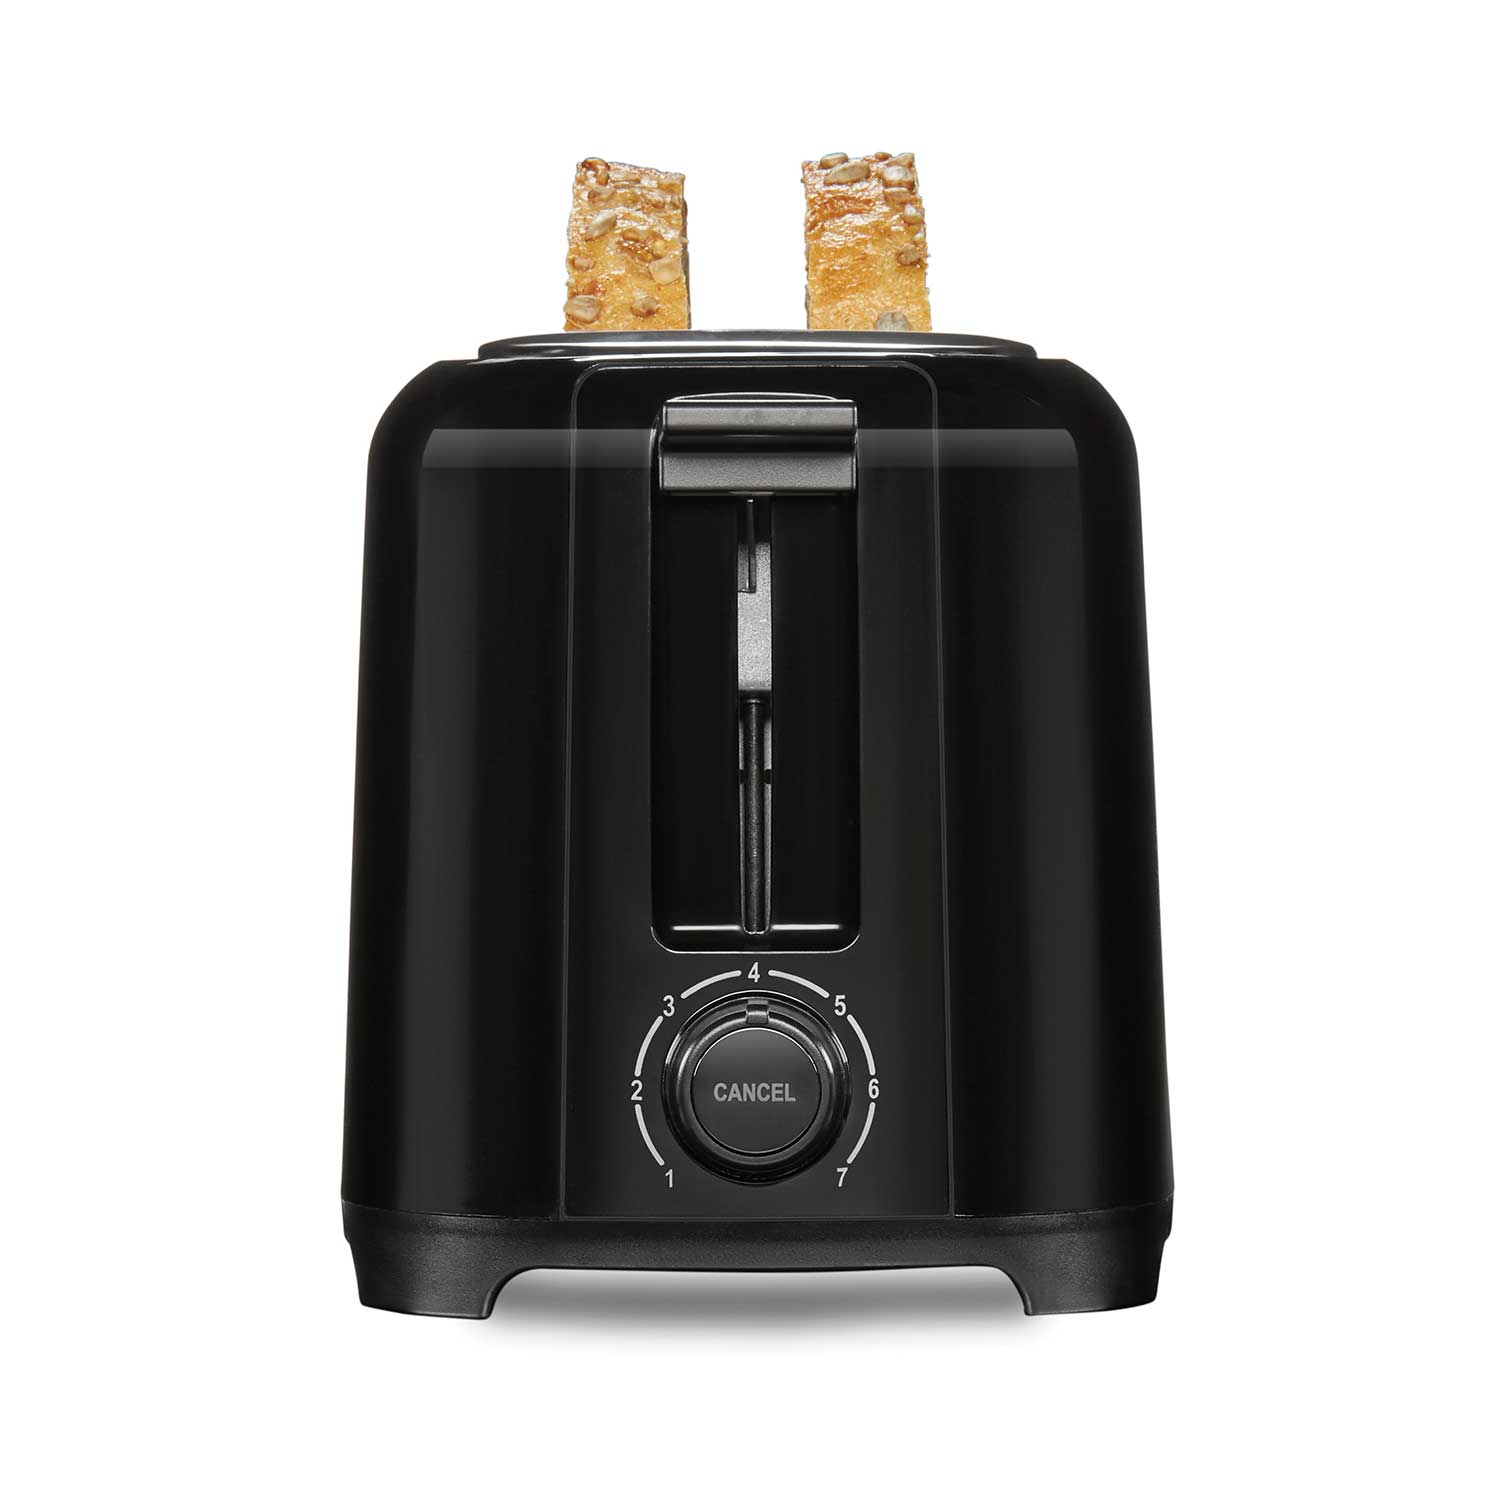 Proctor Silex® 2-Slice Durable Toaster - Black, 1 ct - Kroger